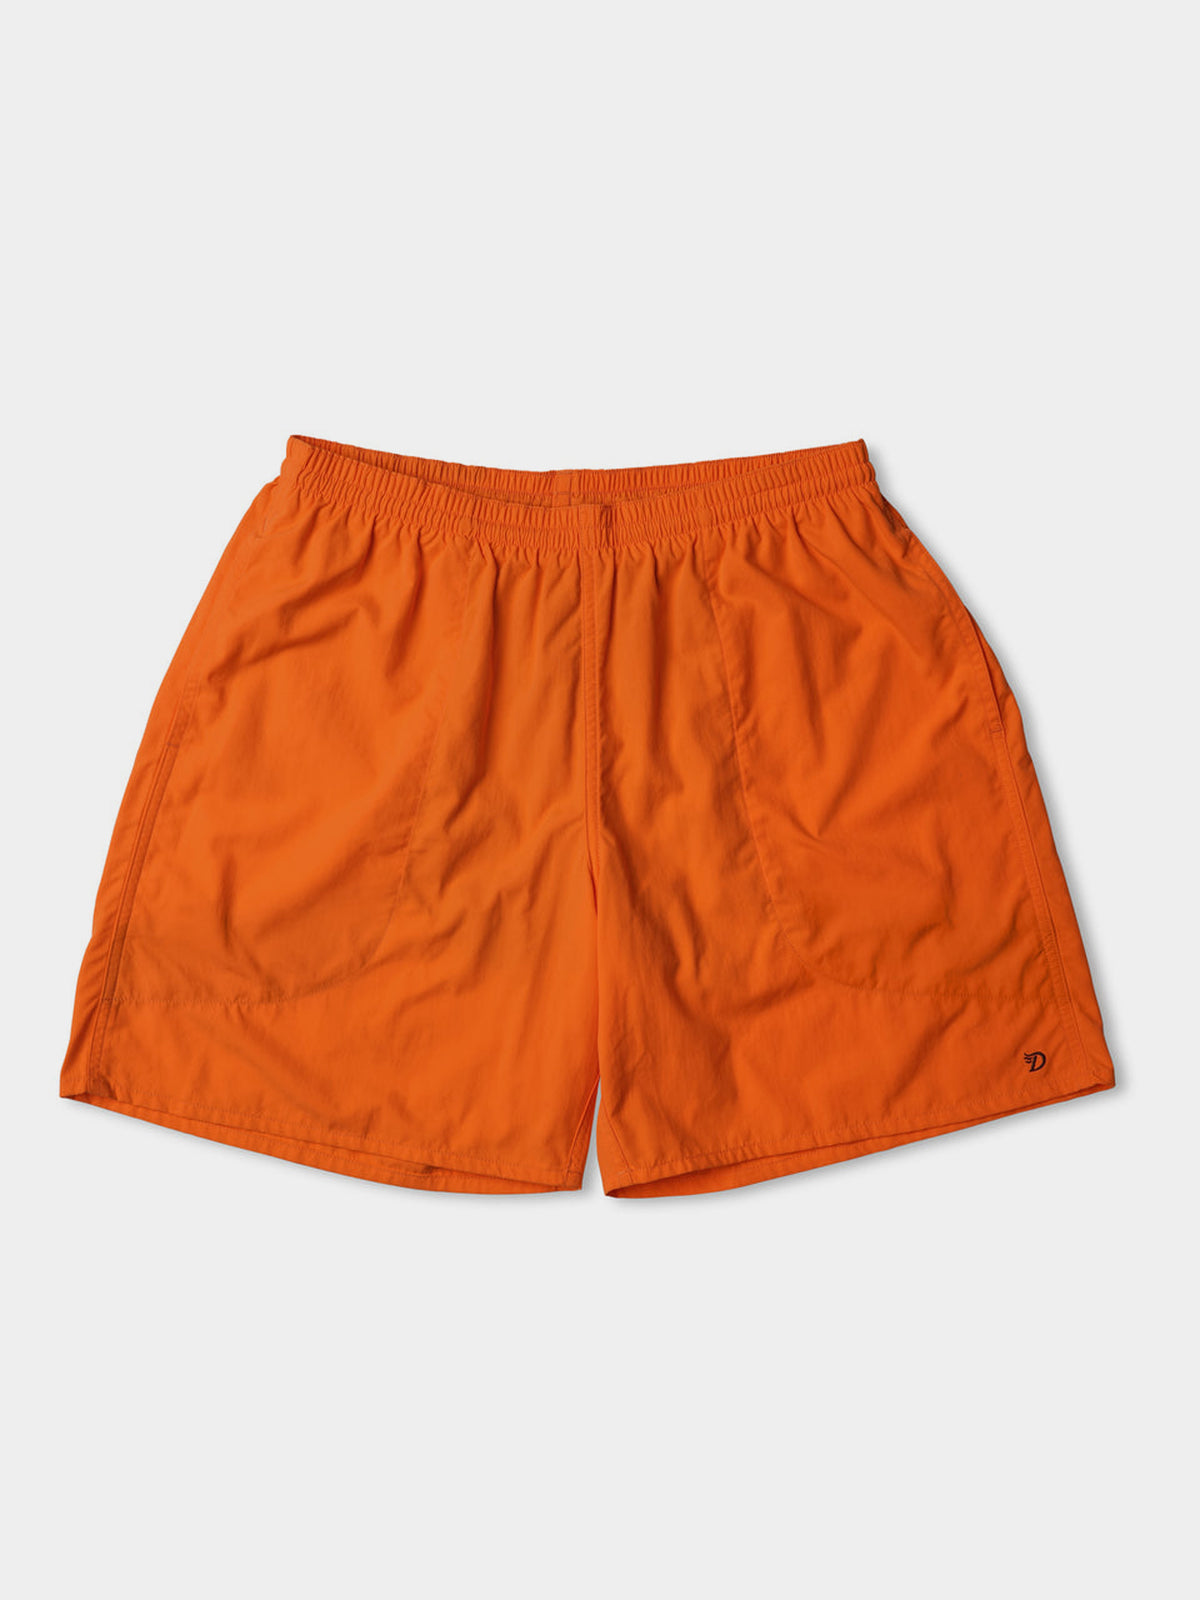 Scout Shorts 7" - Blaze Orange